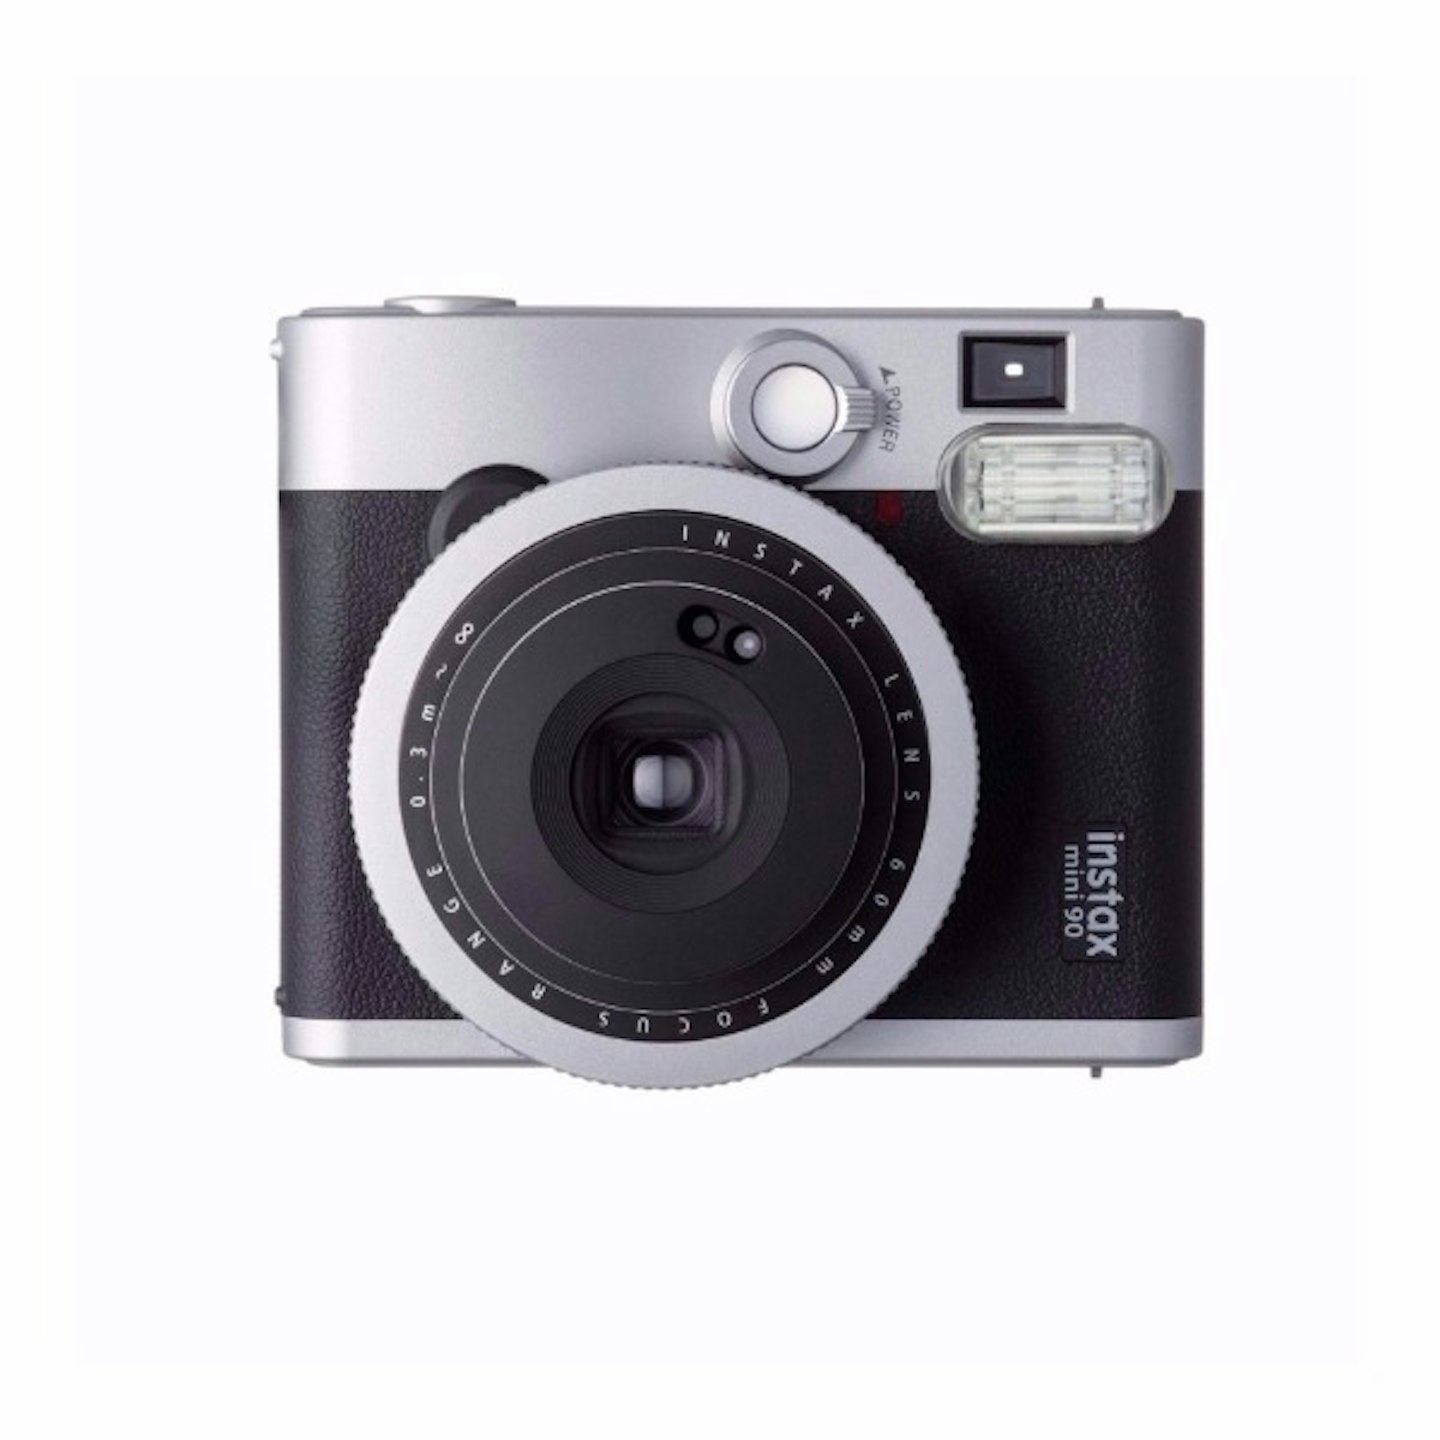 instax-mini-90-camera-gift-guide-tech